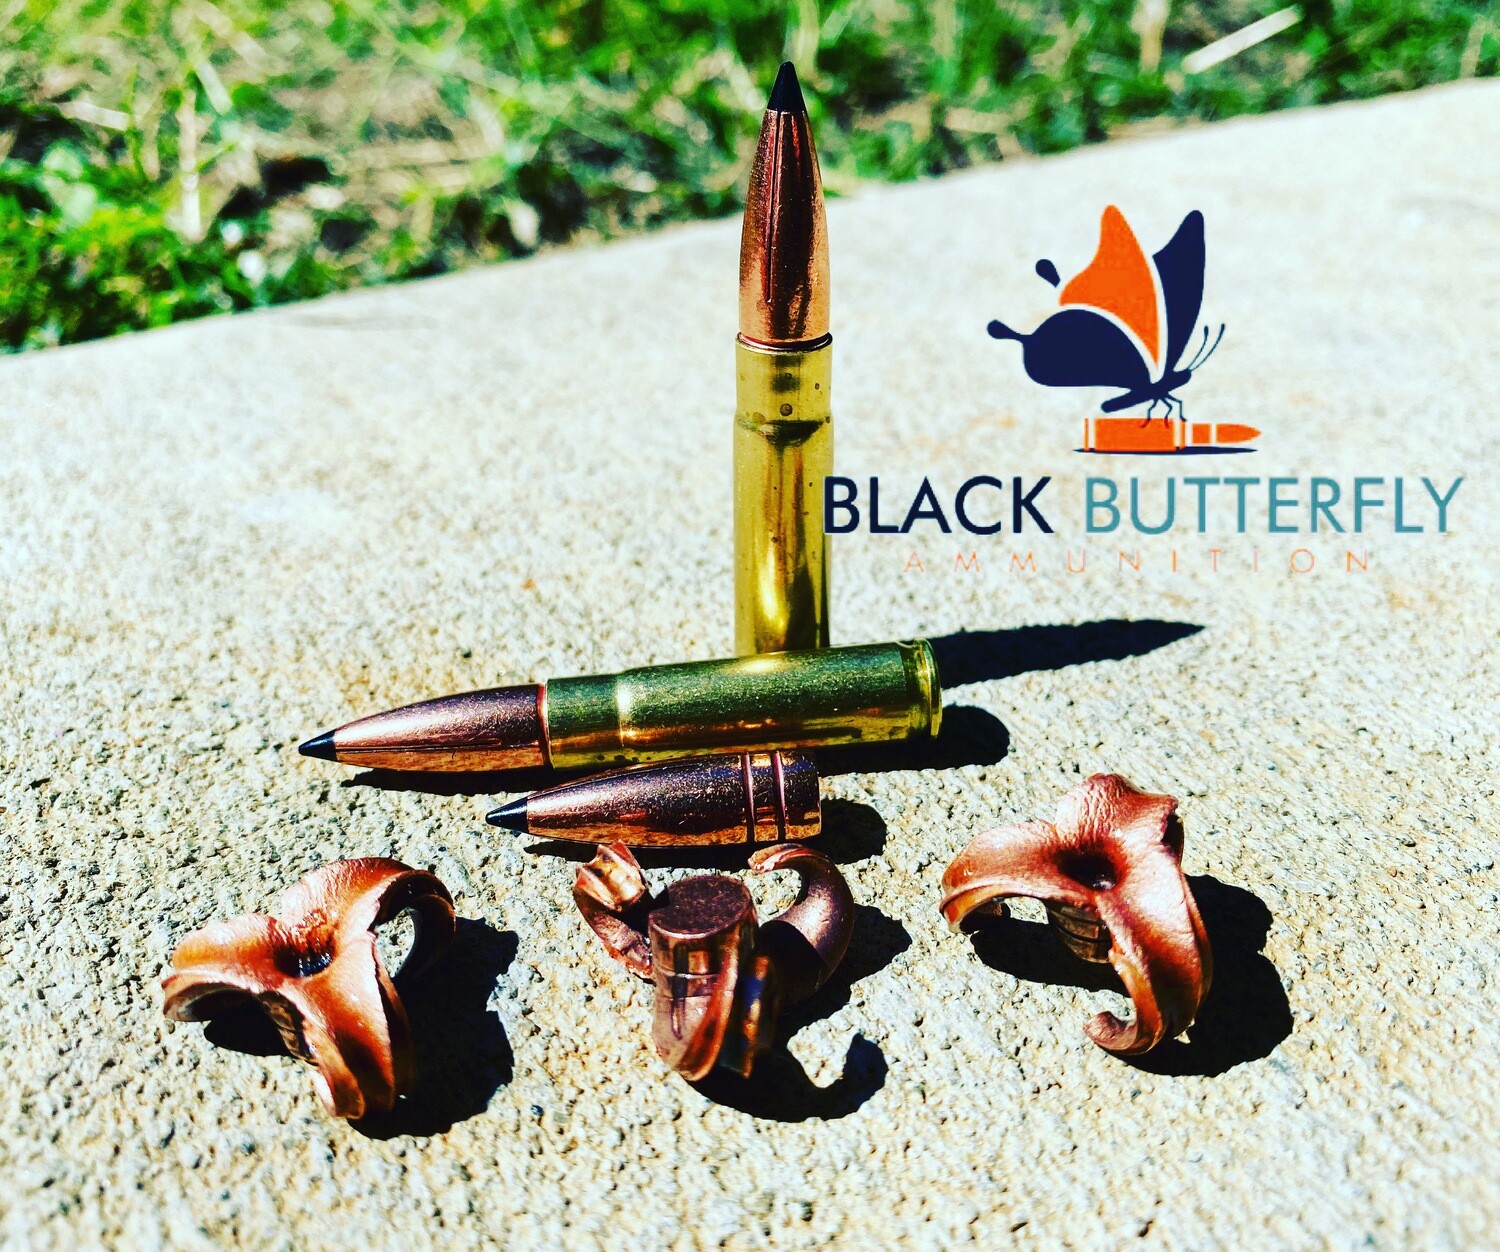 Black Butterfly Ammunition Premium, .300 AAC Blackout, 110 gr, 20 Rounds, Maker Expanding Copper &quot;BOAR TOOTH&quot;